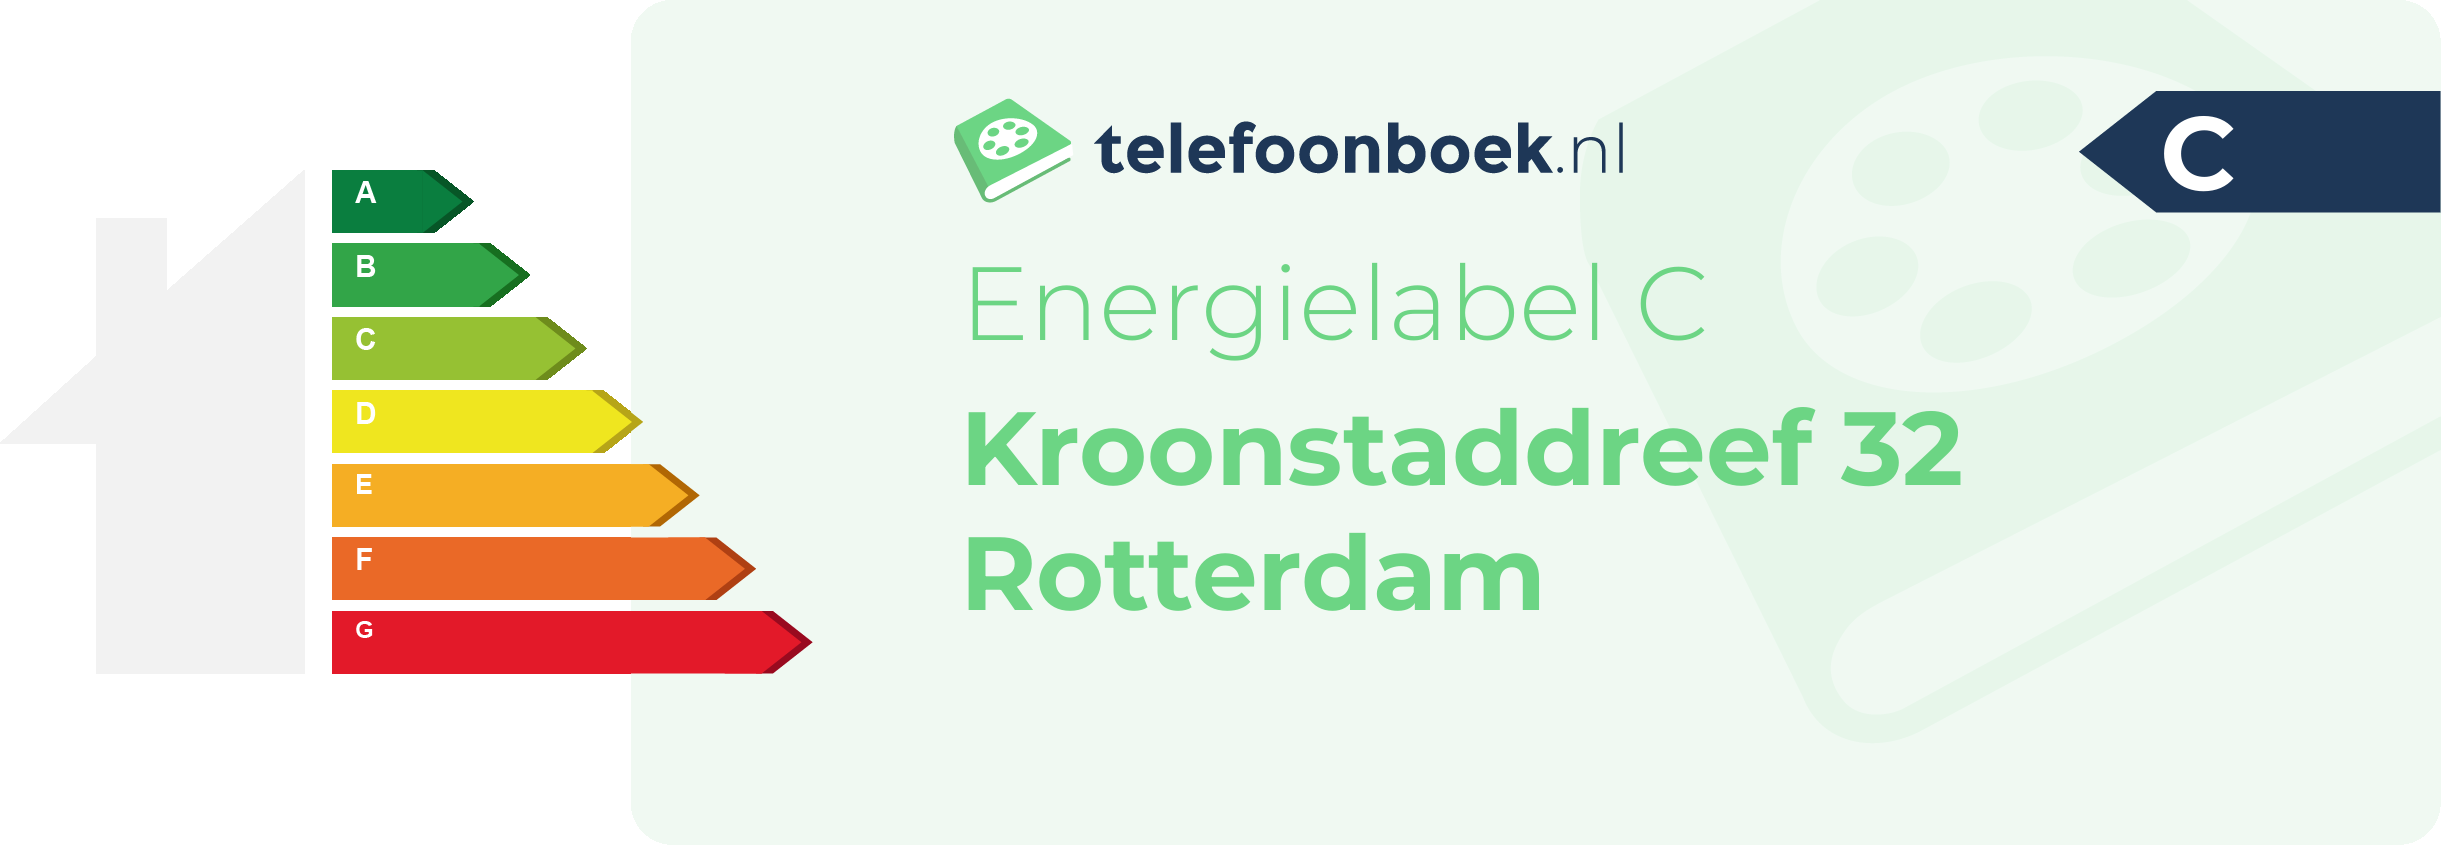 Energielabel Kroonstaddreef 32 Rotterdam